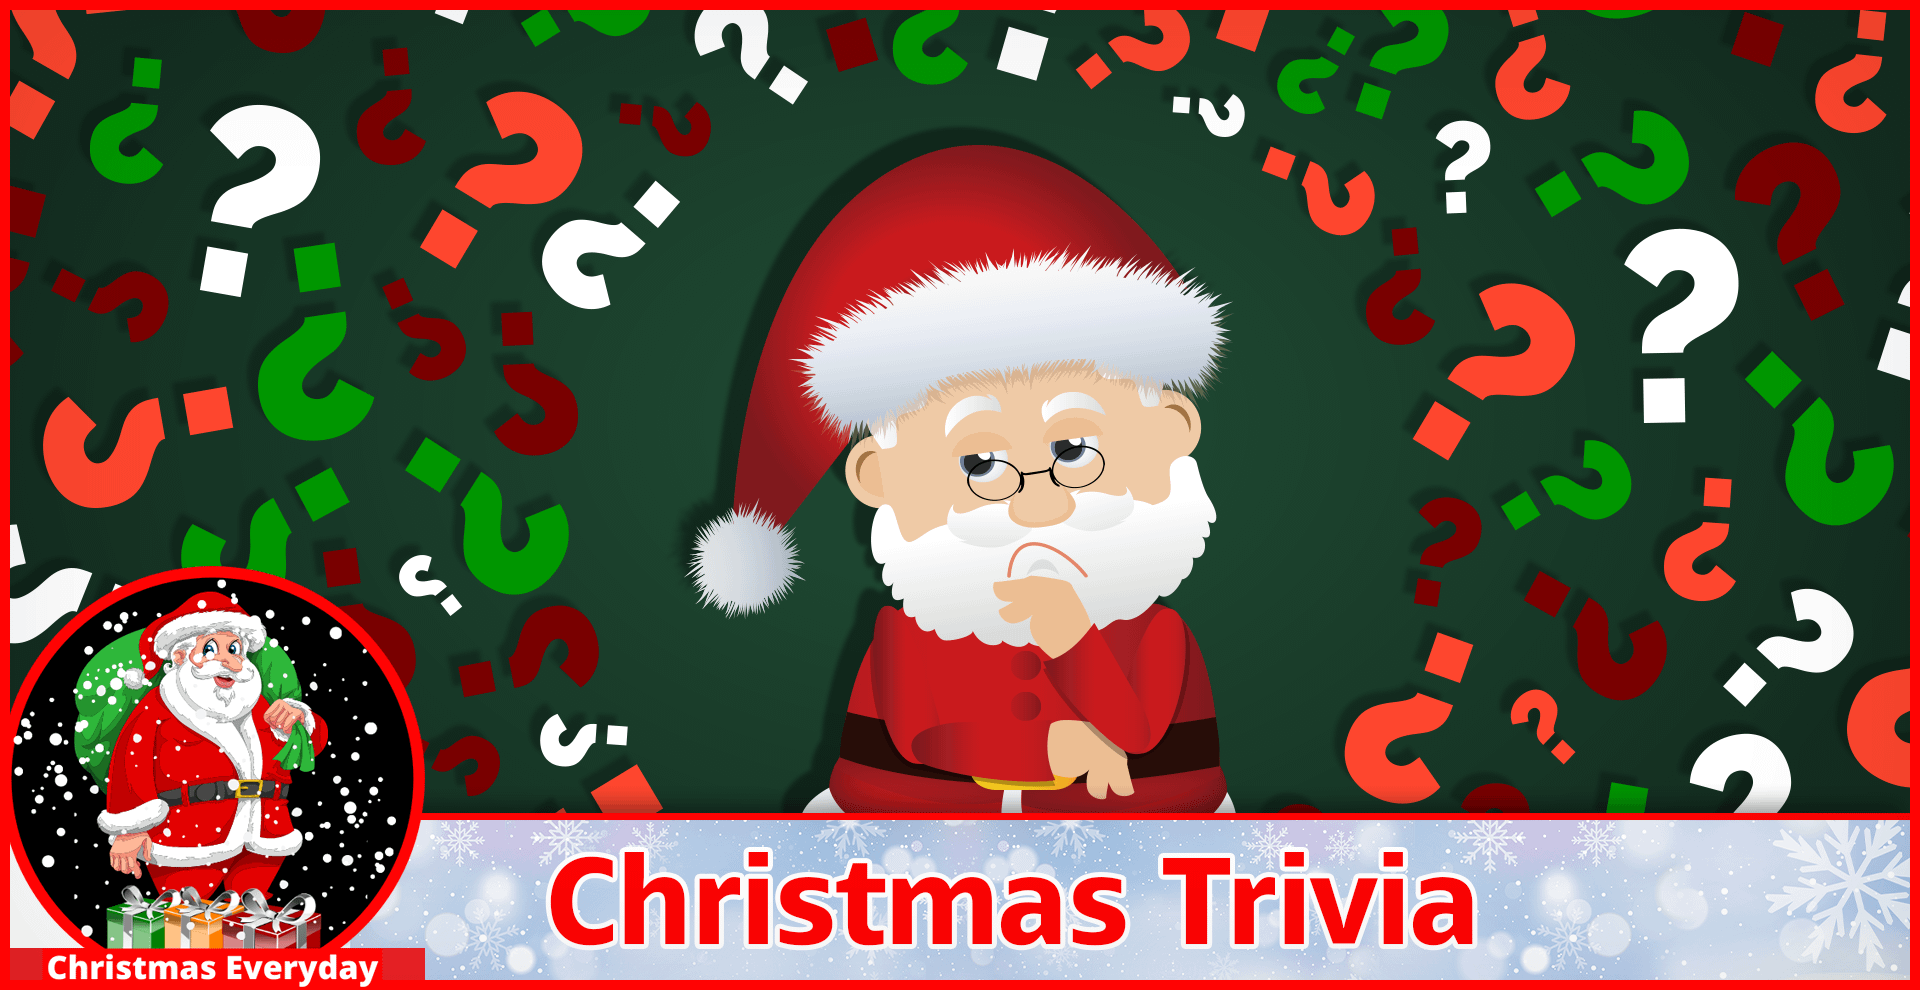 Christmas Everyday Club Trivia